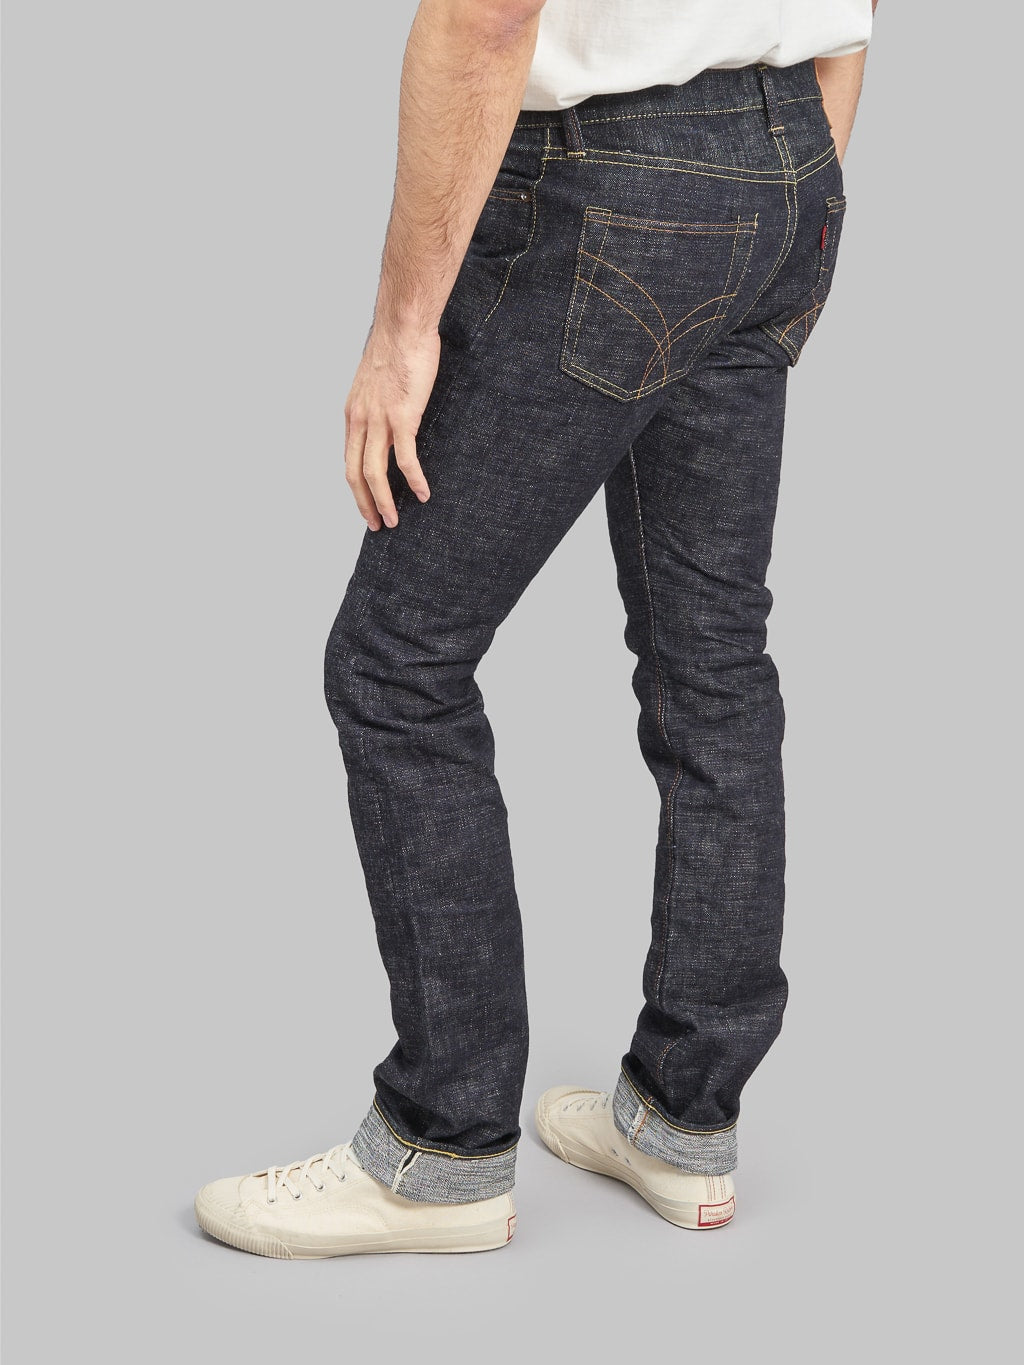 The Strike Gold 7109 Ultra Slubby Slim Tapered Jeans fitting